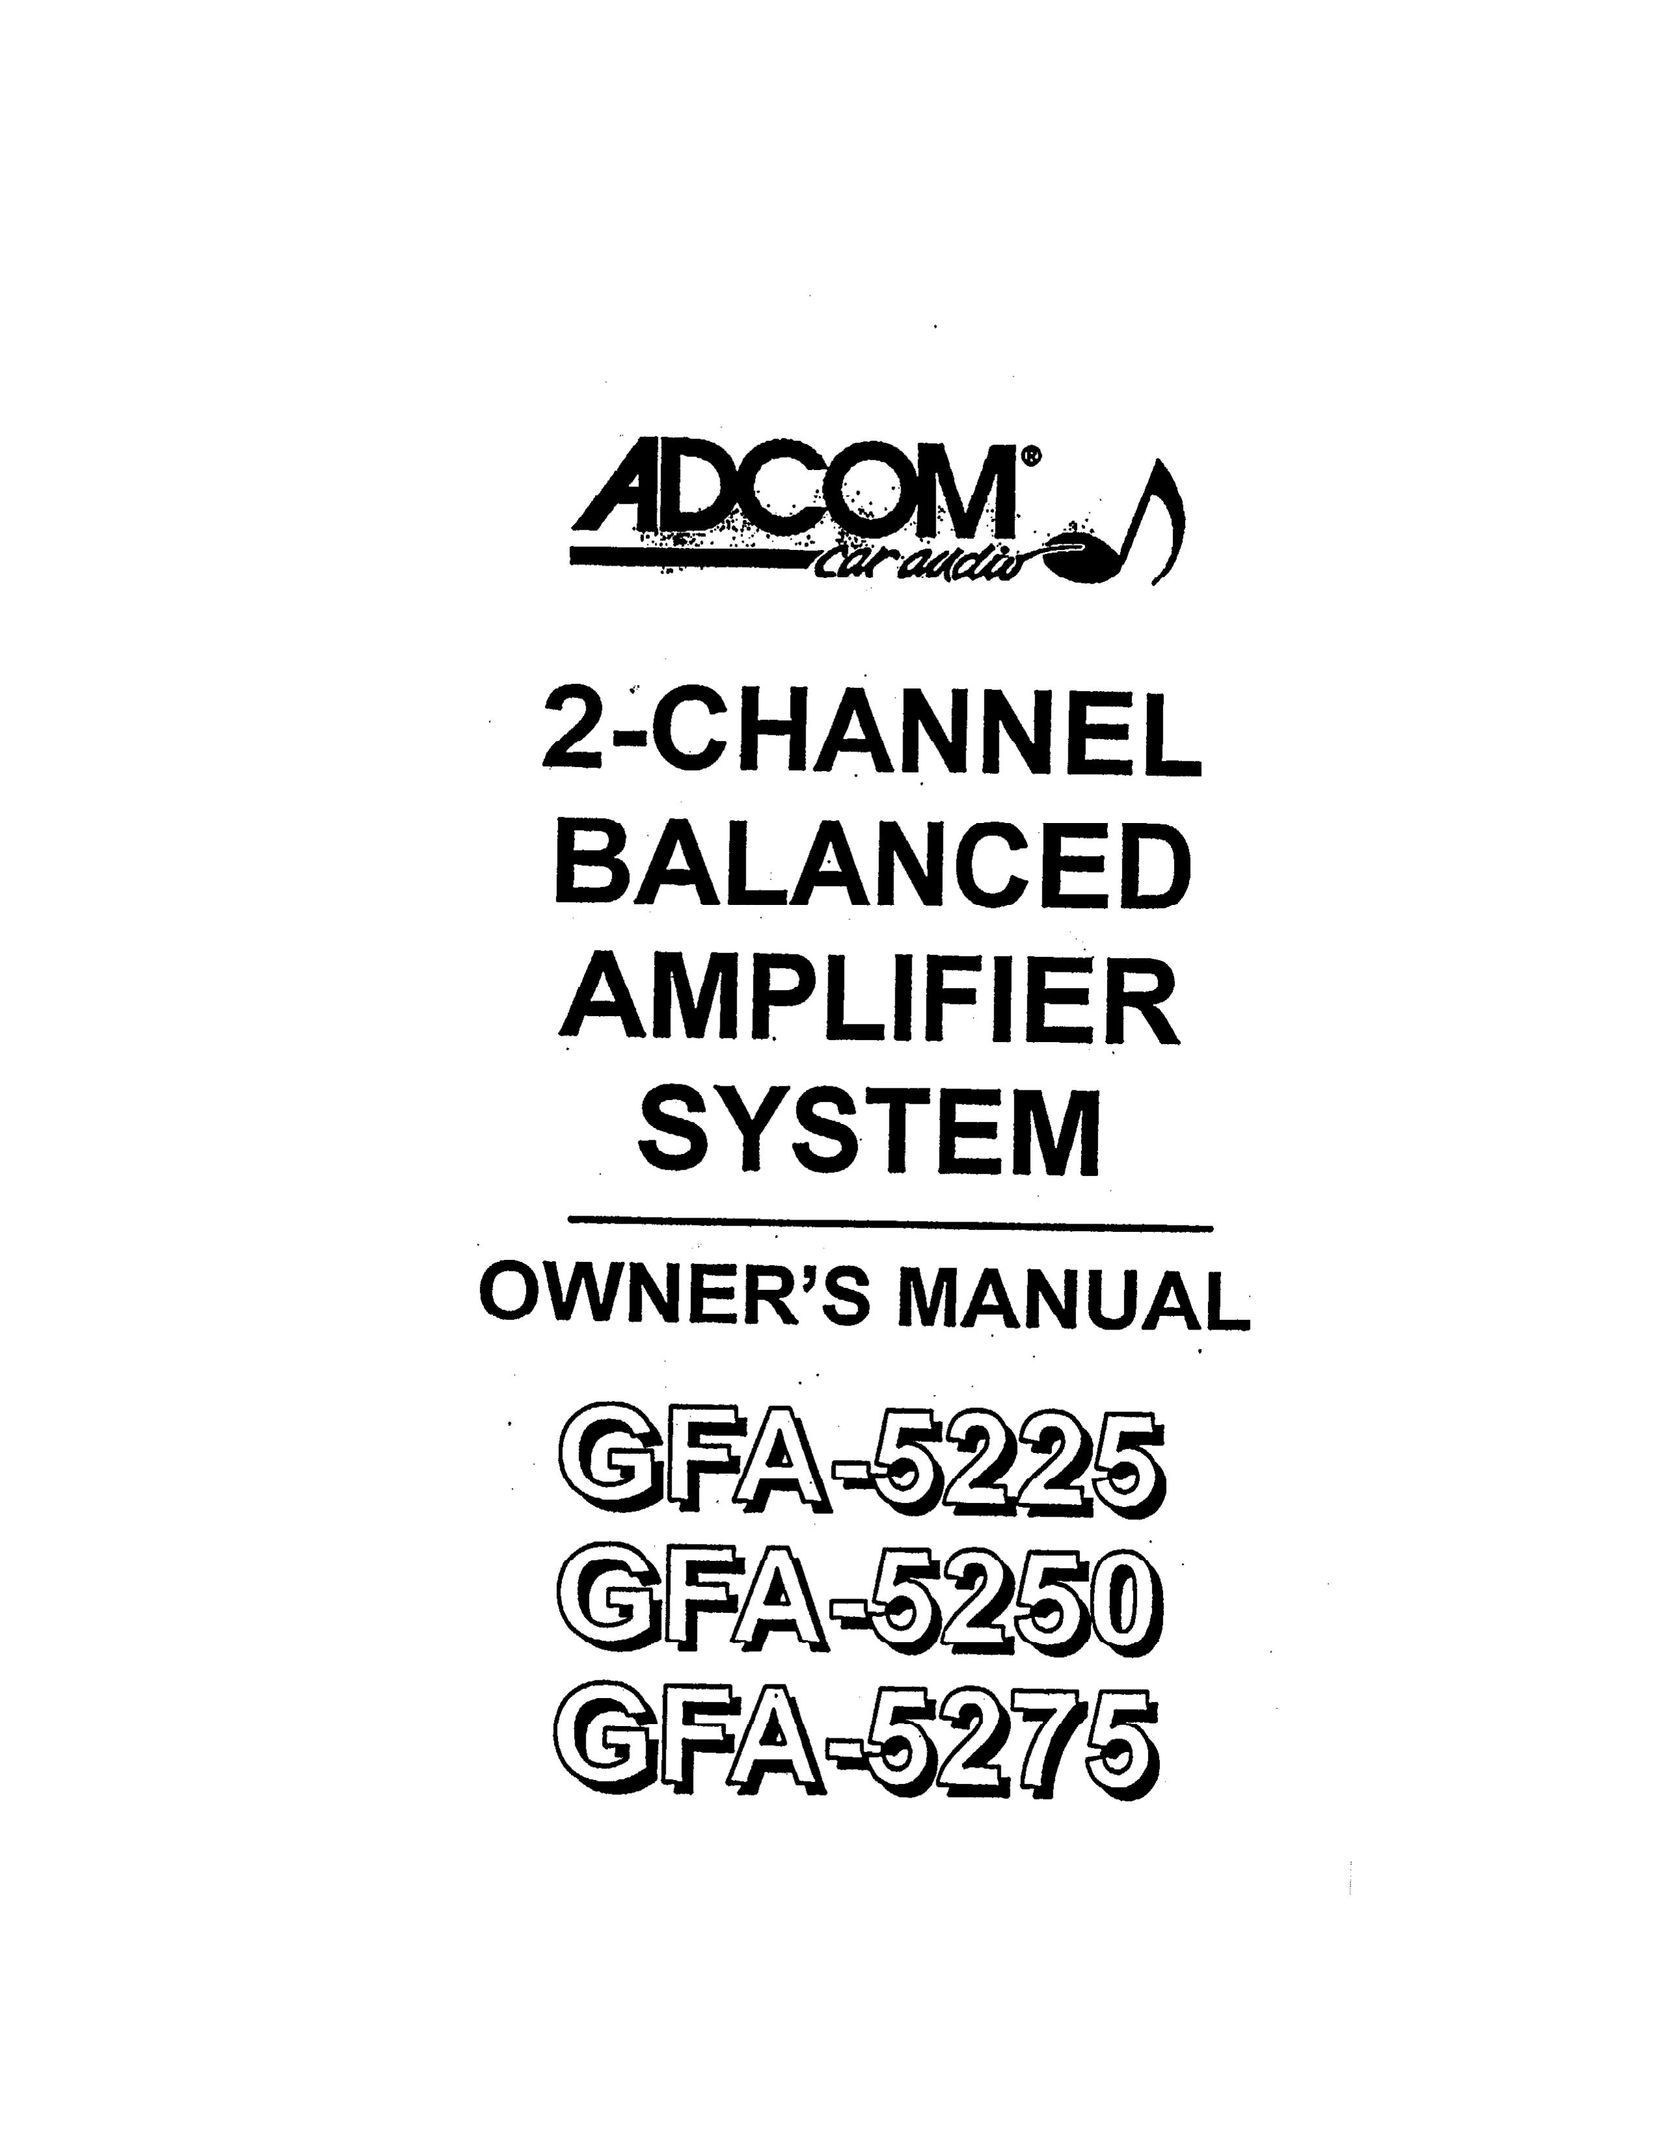 Adcom GFA-5275 Car Amplifier User Manual